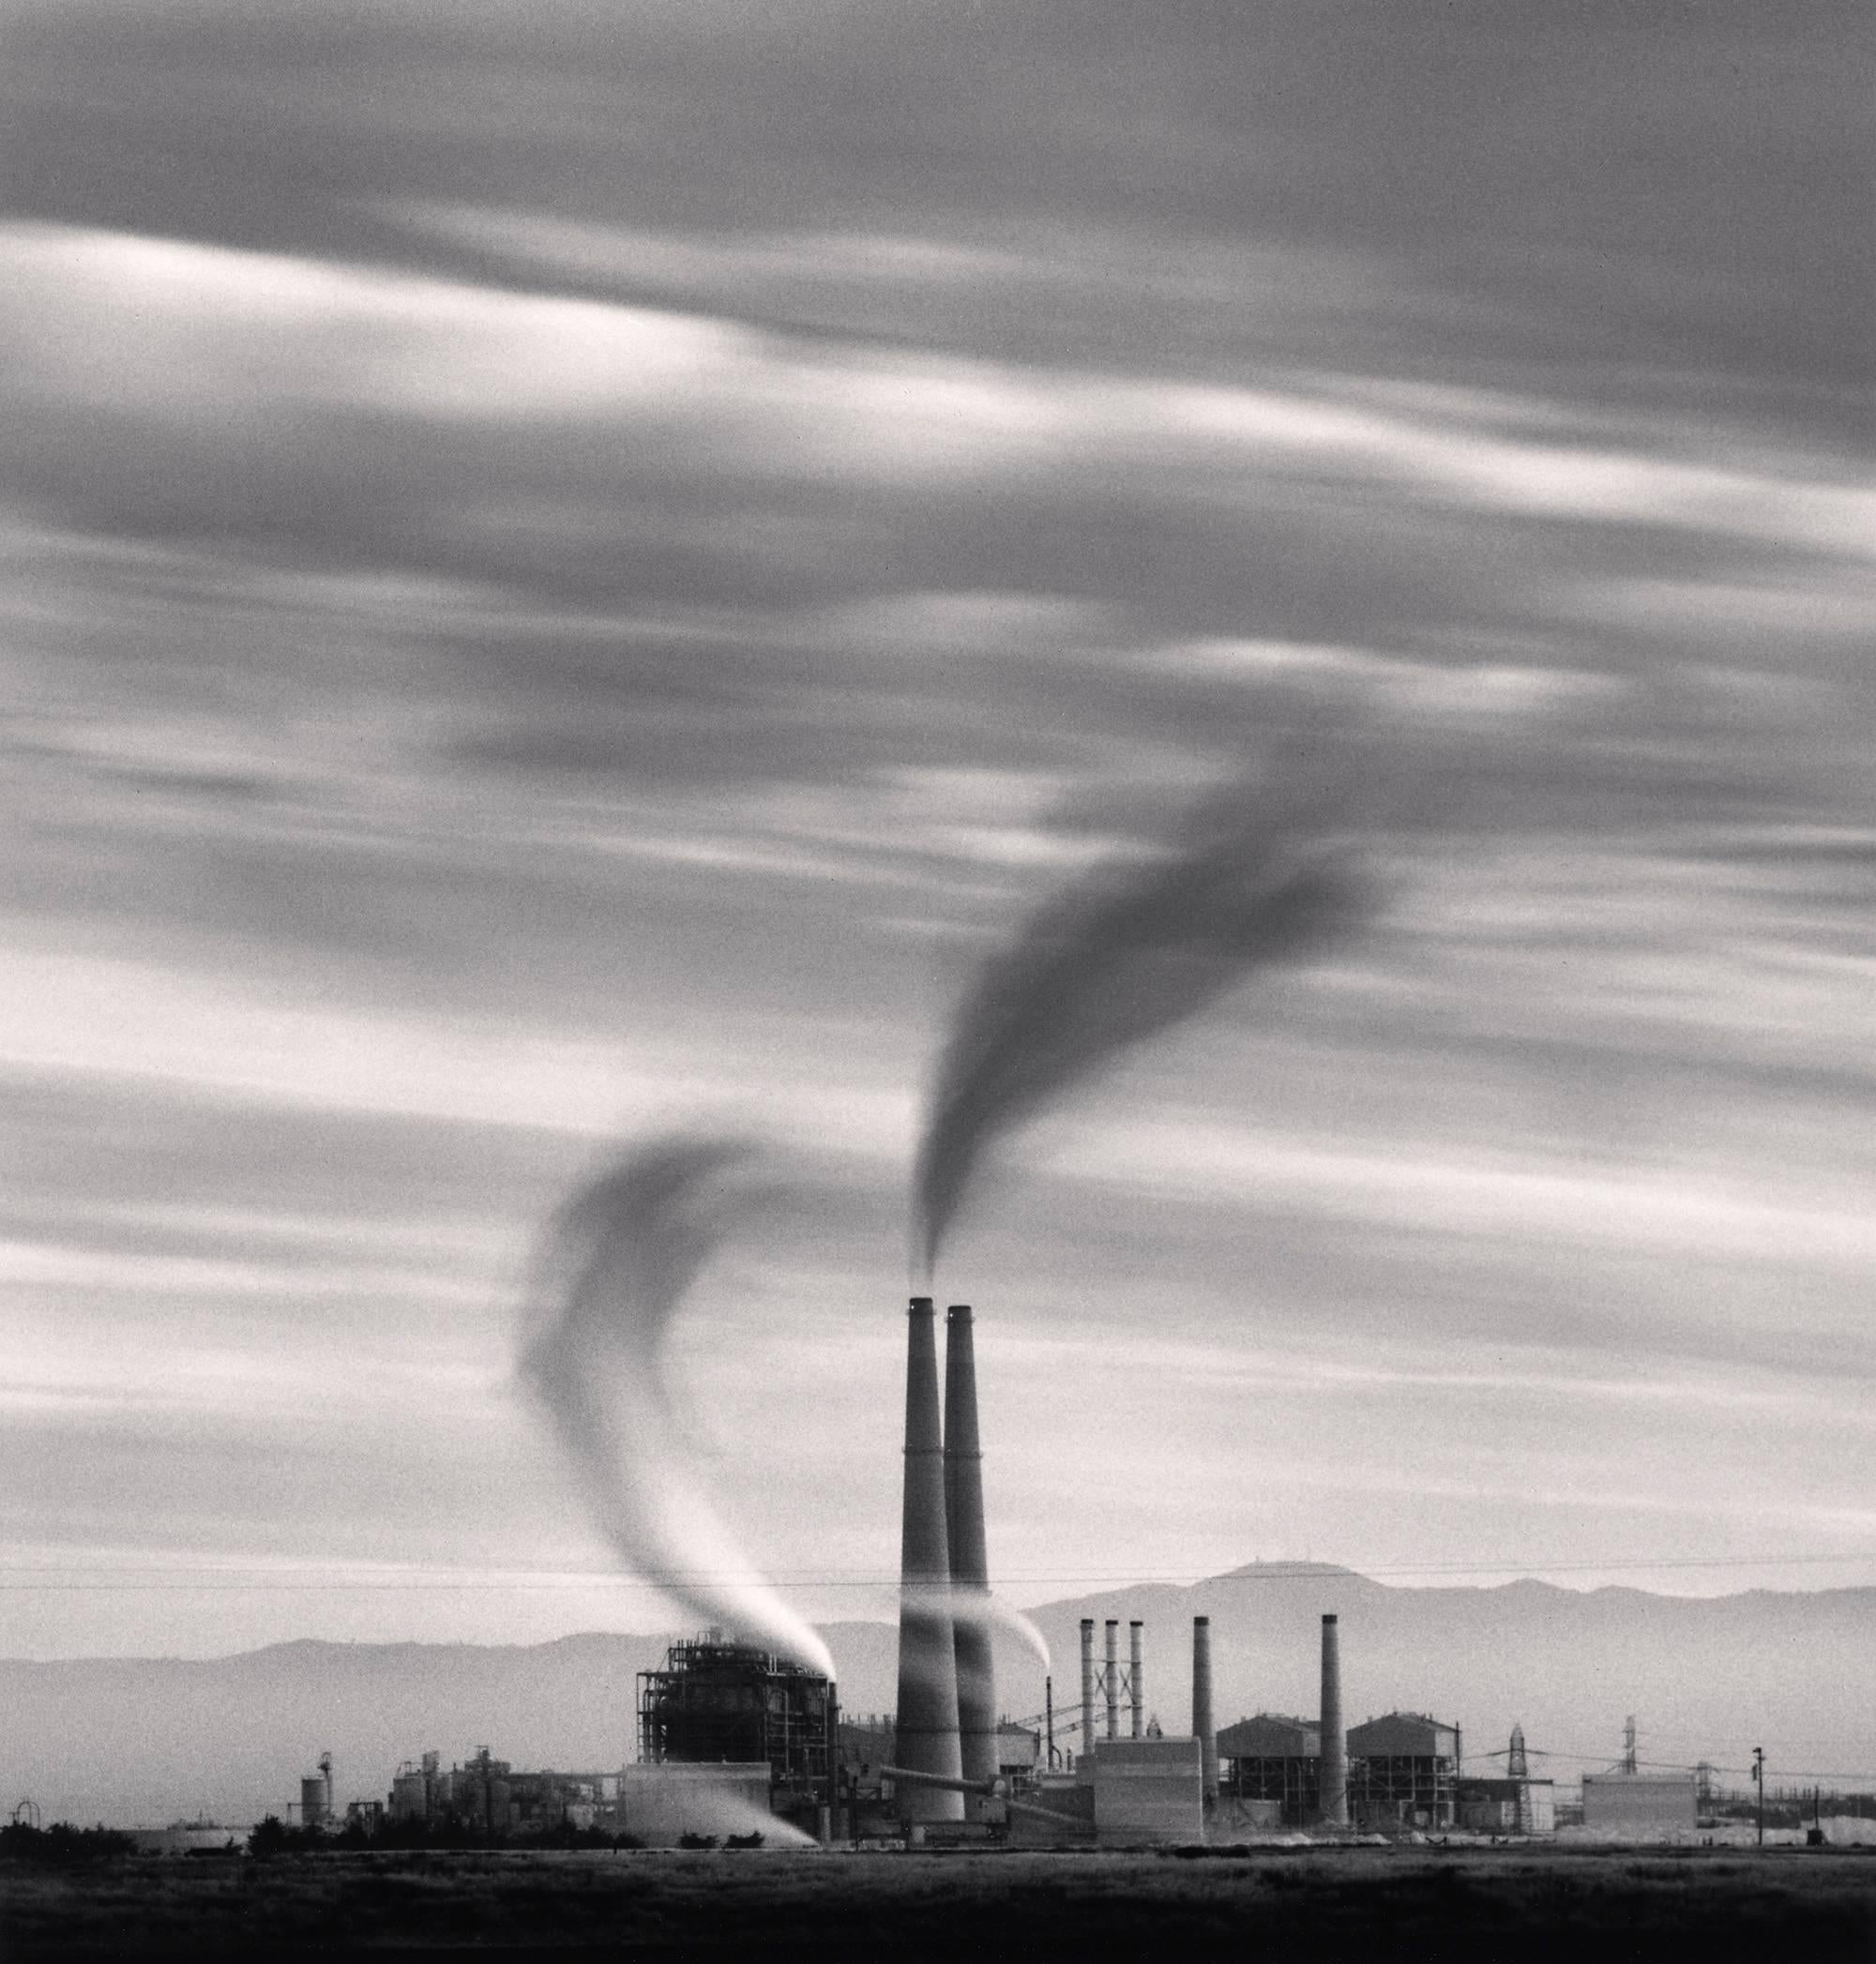 Michael Kenna Landscape Photograph - Moss Landing Power Station, Study 2, Moss Landing, California, USA, 1987